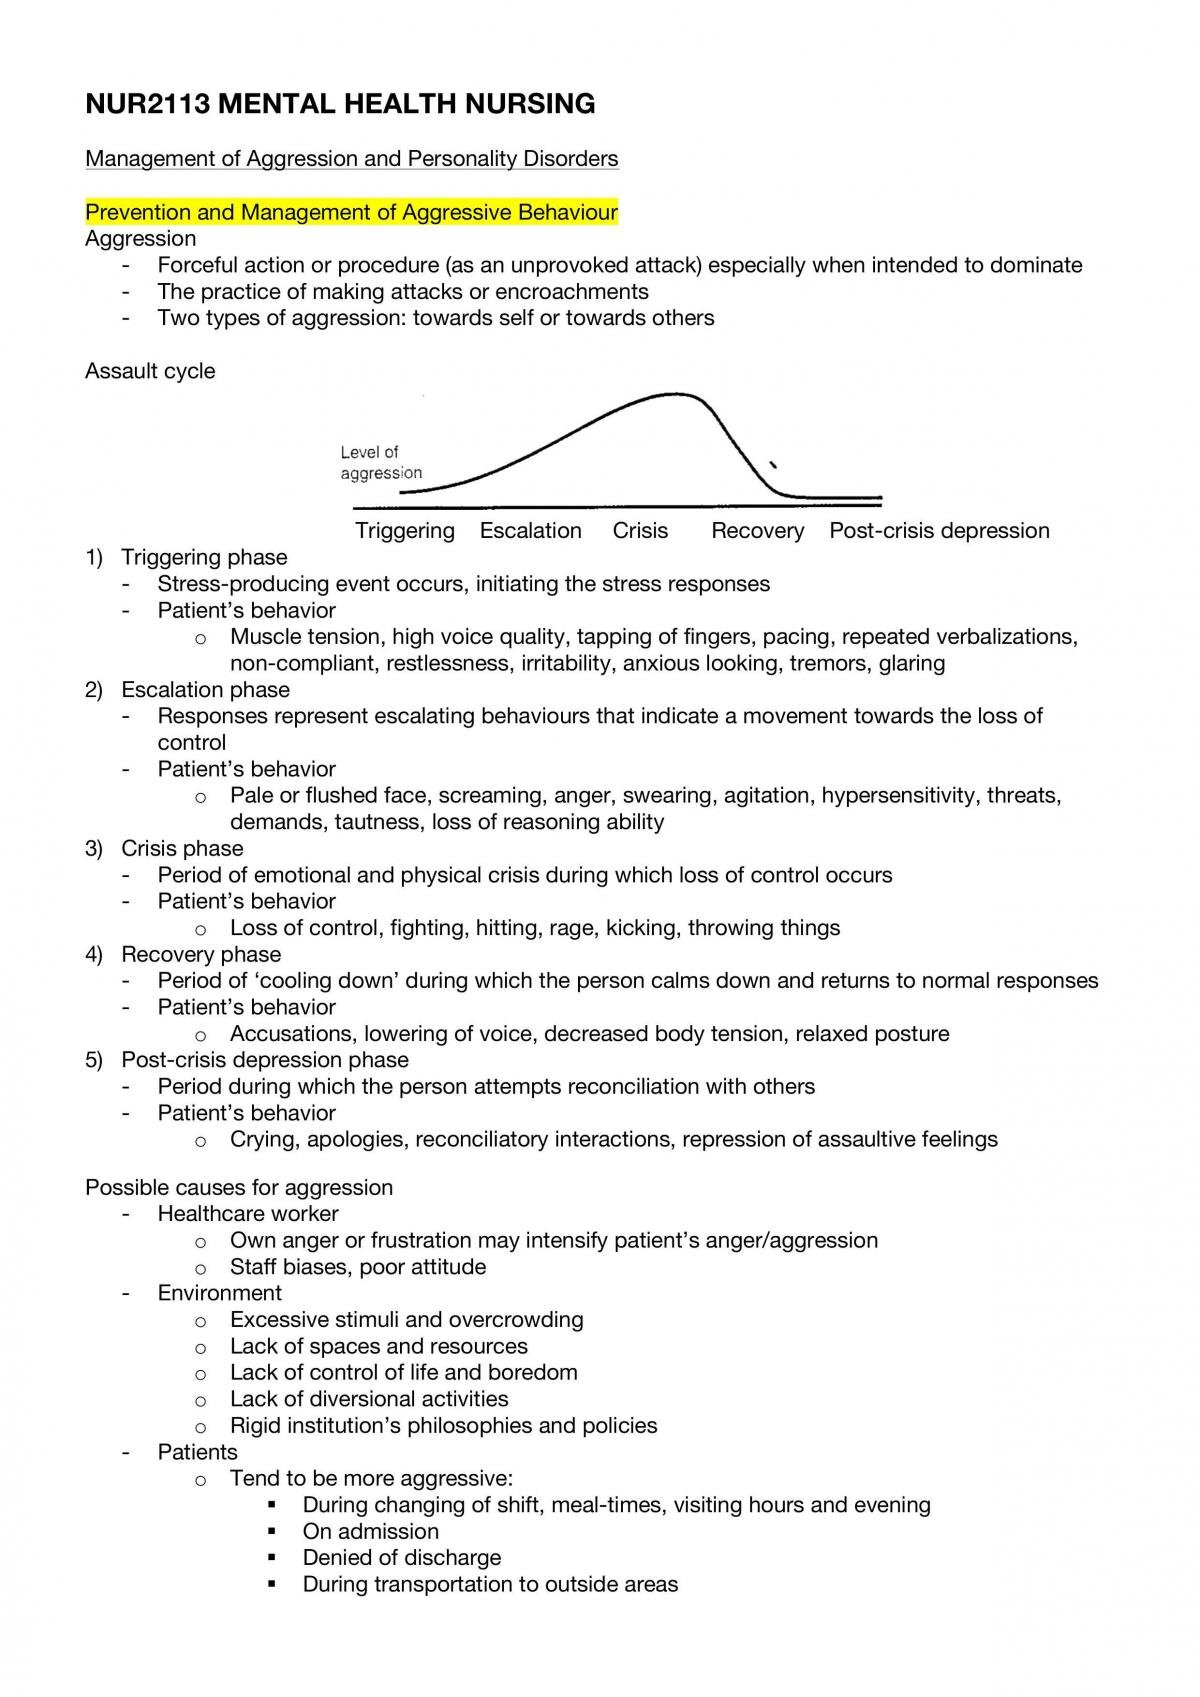 NUR2113 Mental Health Nursing Complete Study Notes - Page 25